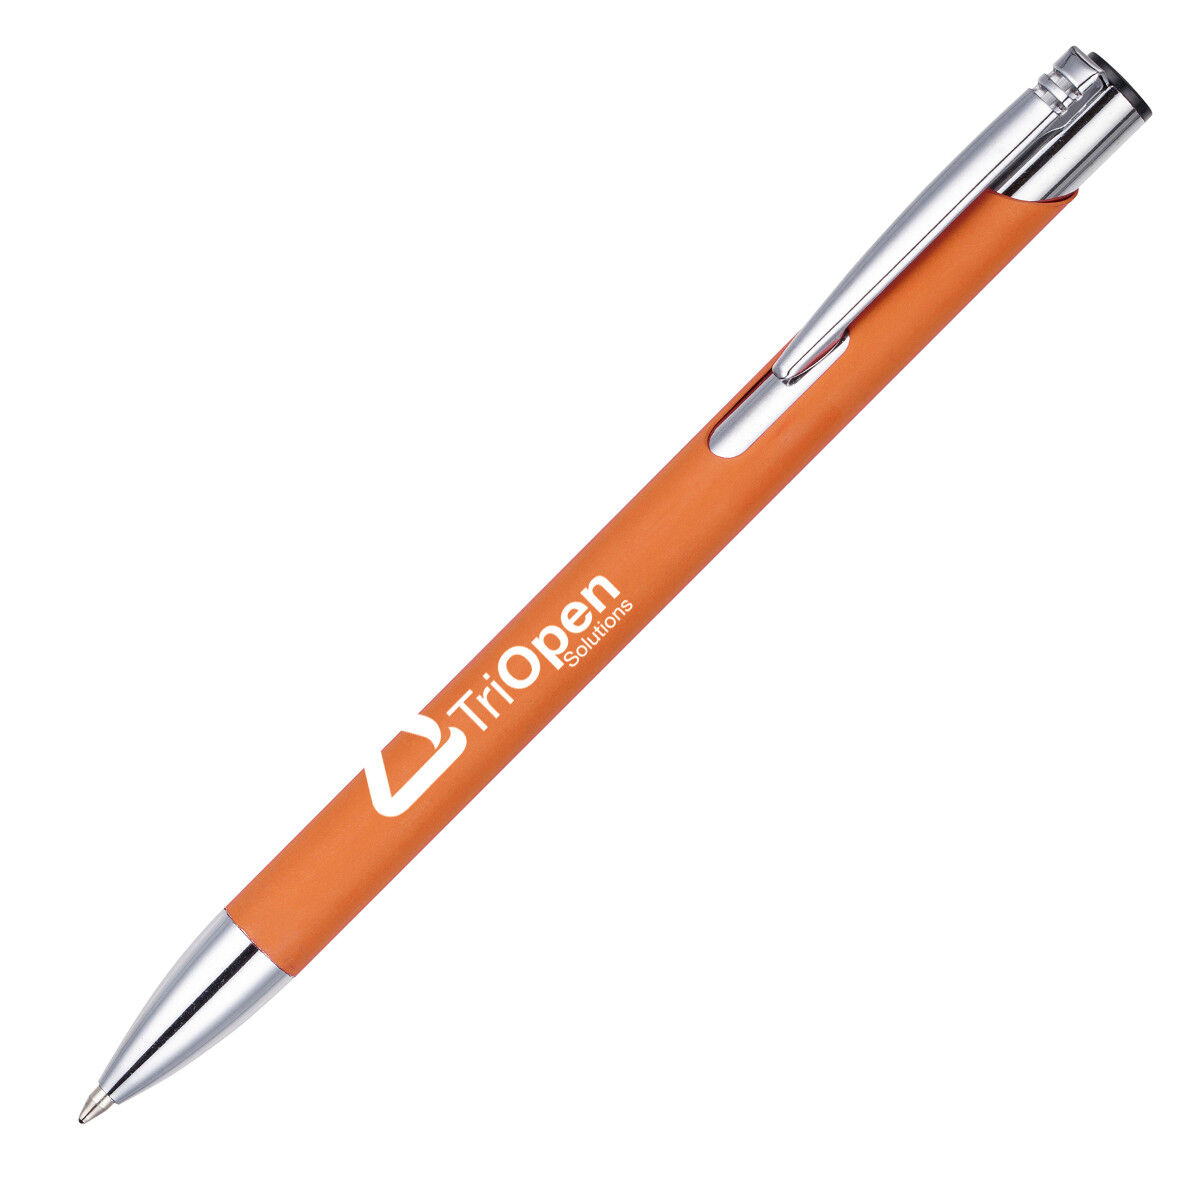 Sample branding on pen with amber colour scheme